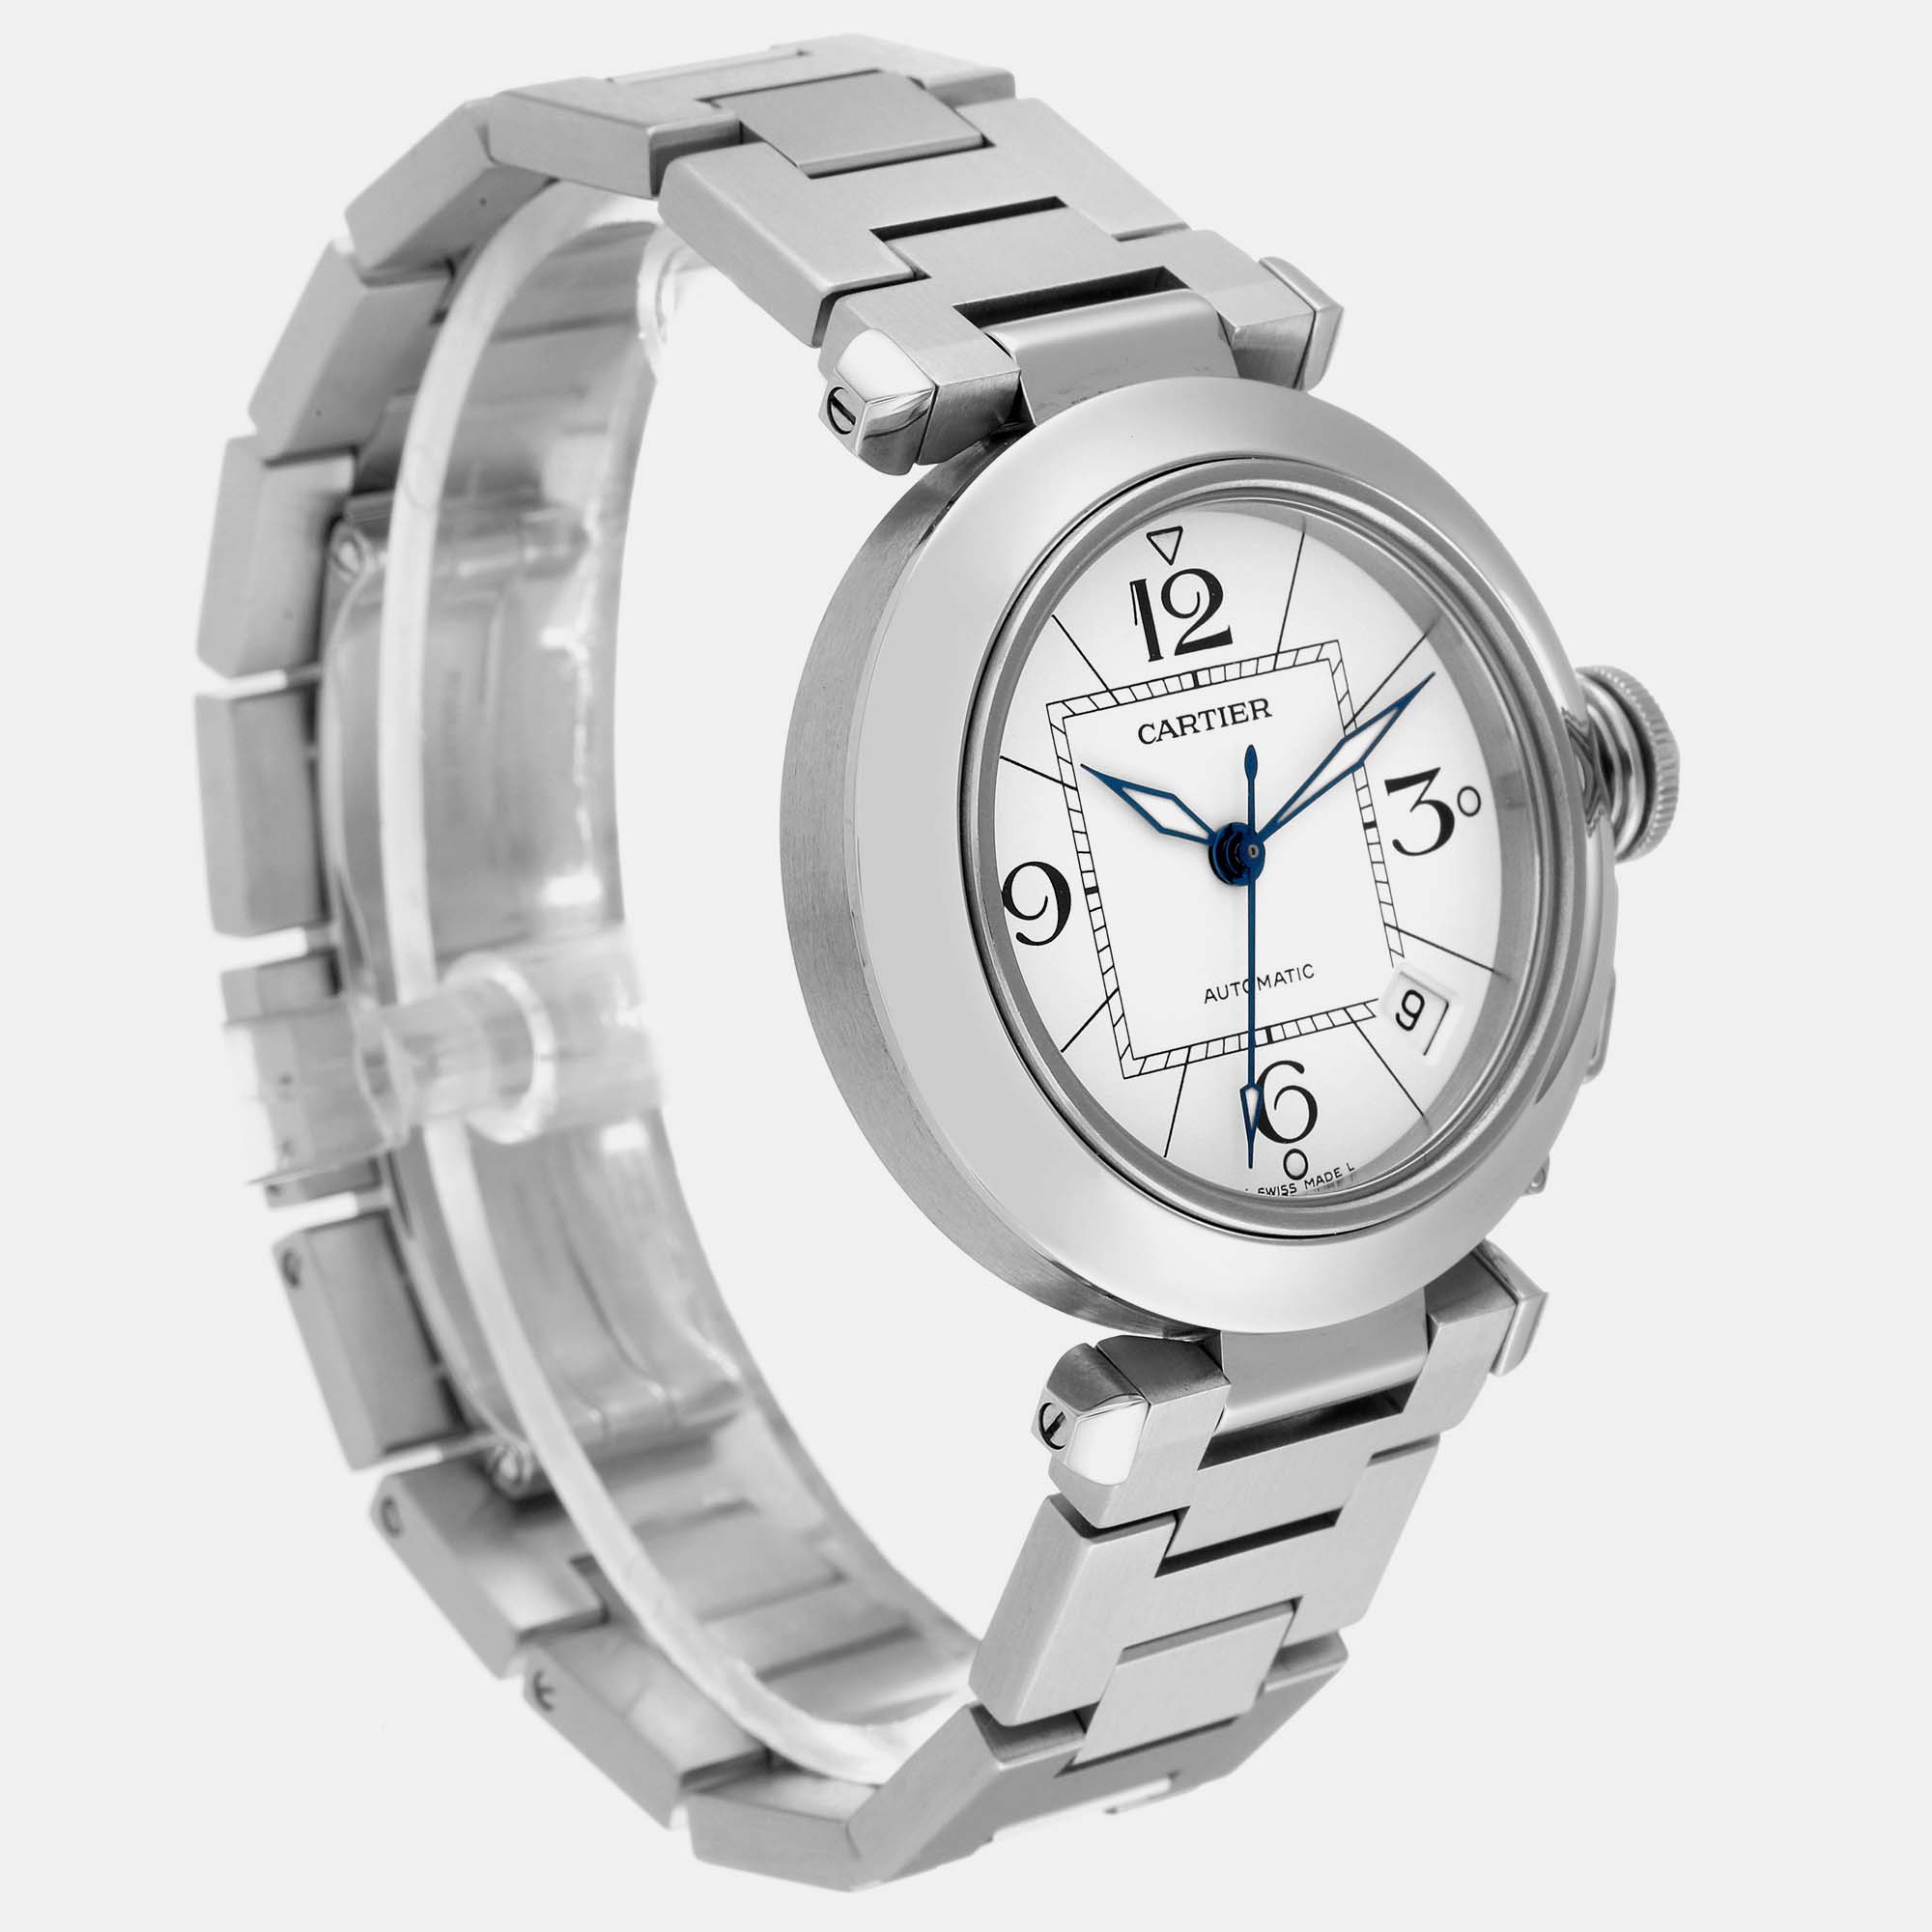 Cartier Pasha C Midsize White Dial Automatic Steel Mens Watch W31074M7 35 Mm